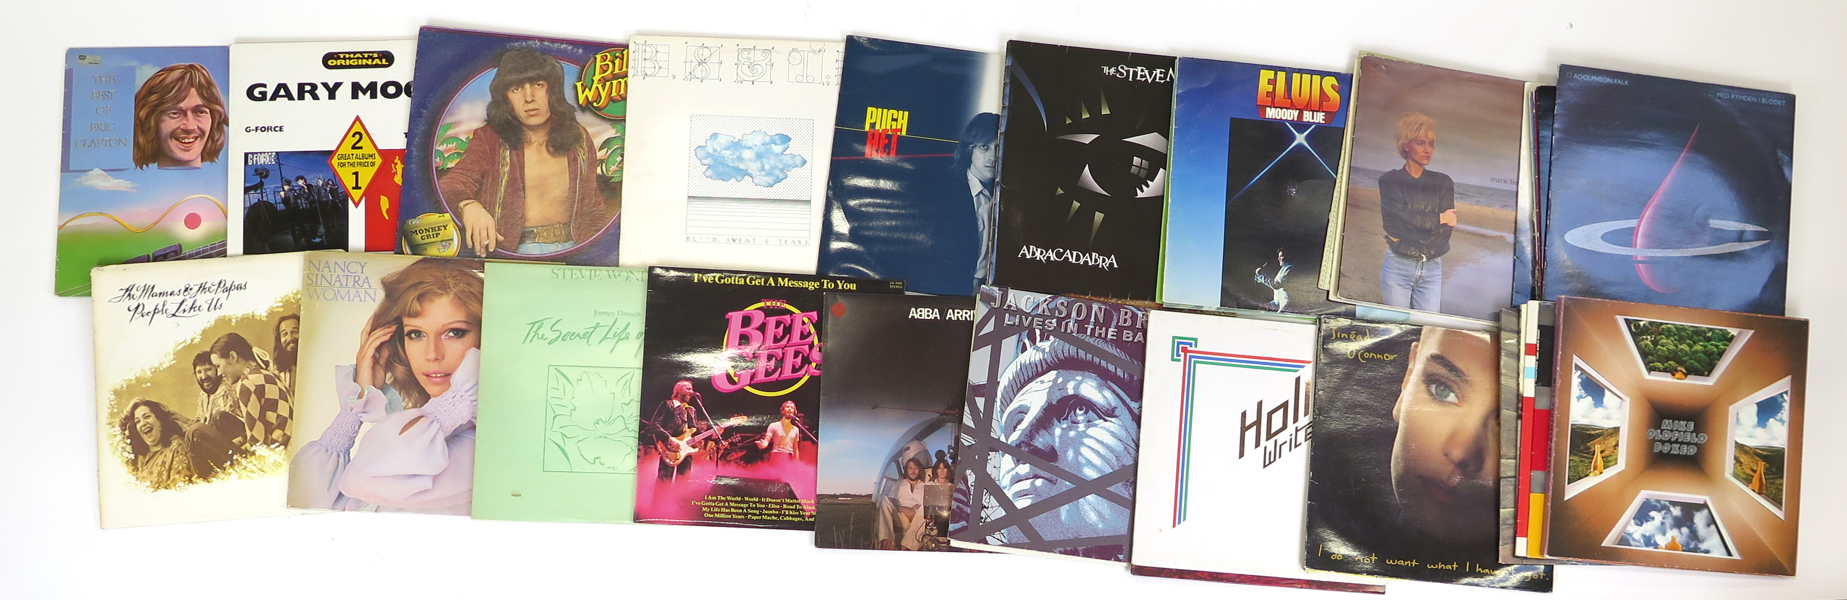 Parti LP-skivor, bl.a Mike Oldfield, Gary Moore, Eric Clapton mm_23817a_8dac7d98241f5a6_lg.jpeg